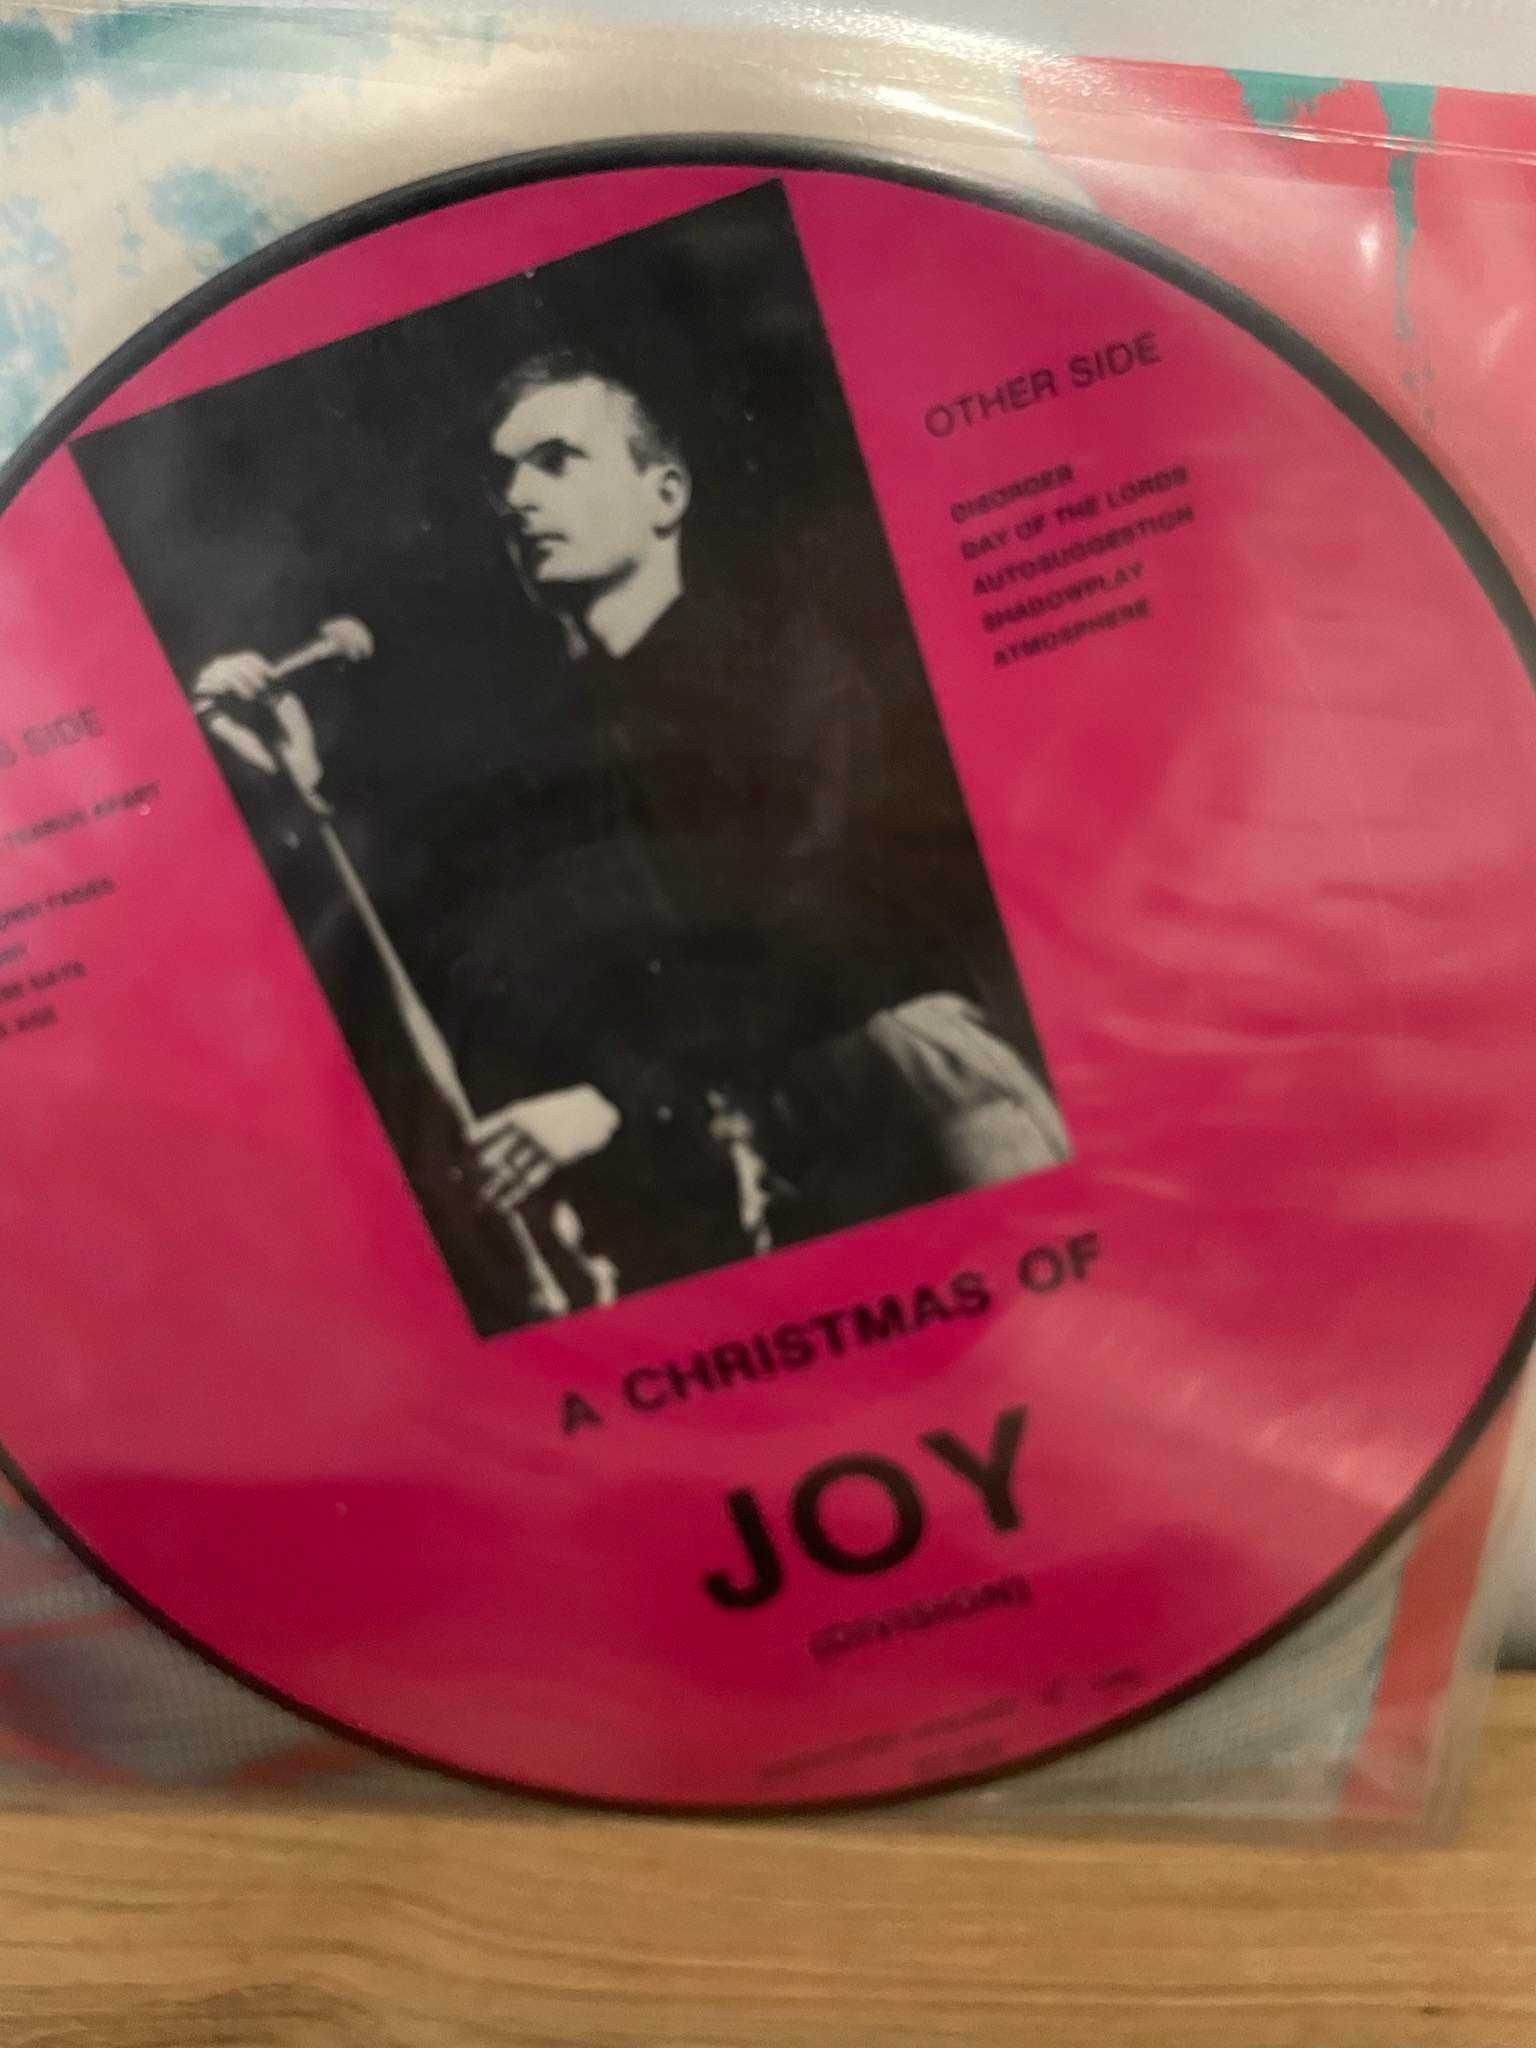 Joy Division – A Christmas Of Joy (Division)